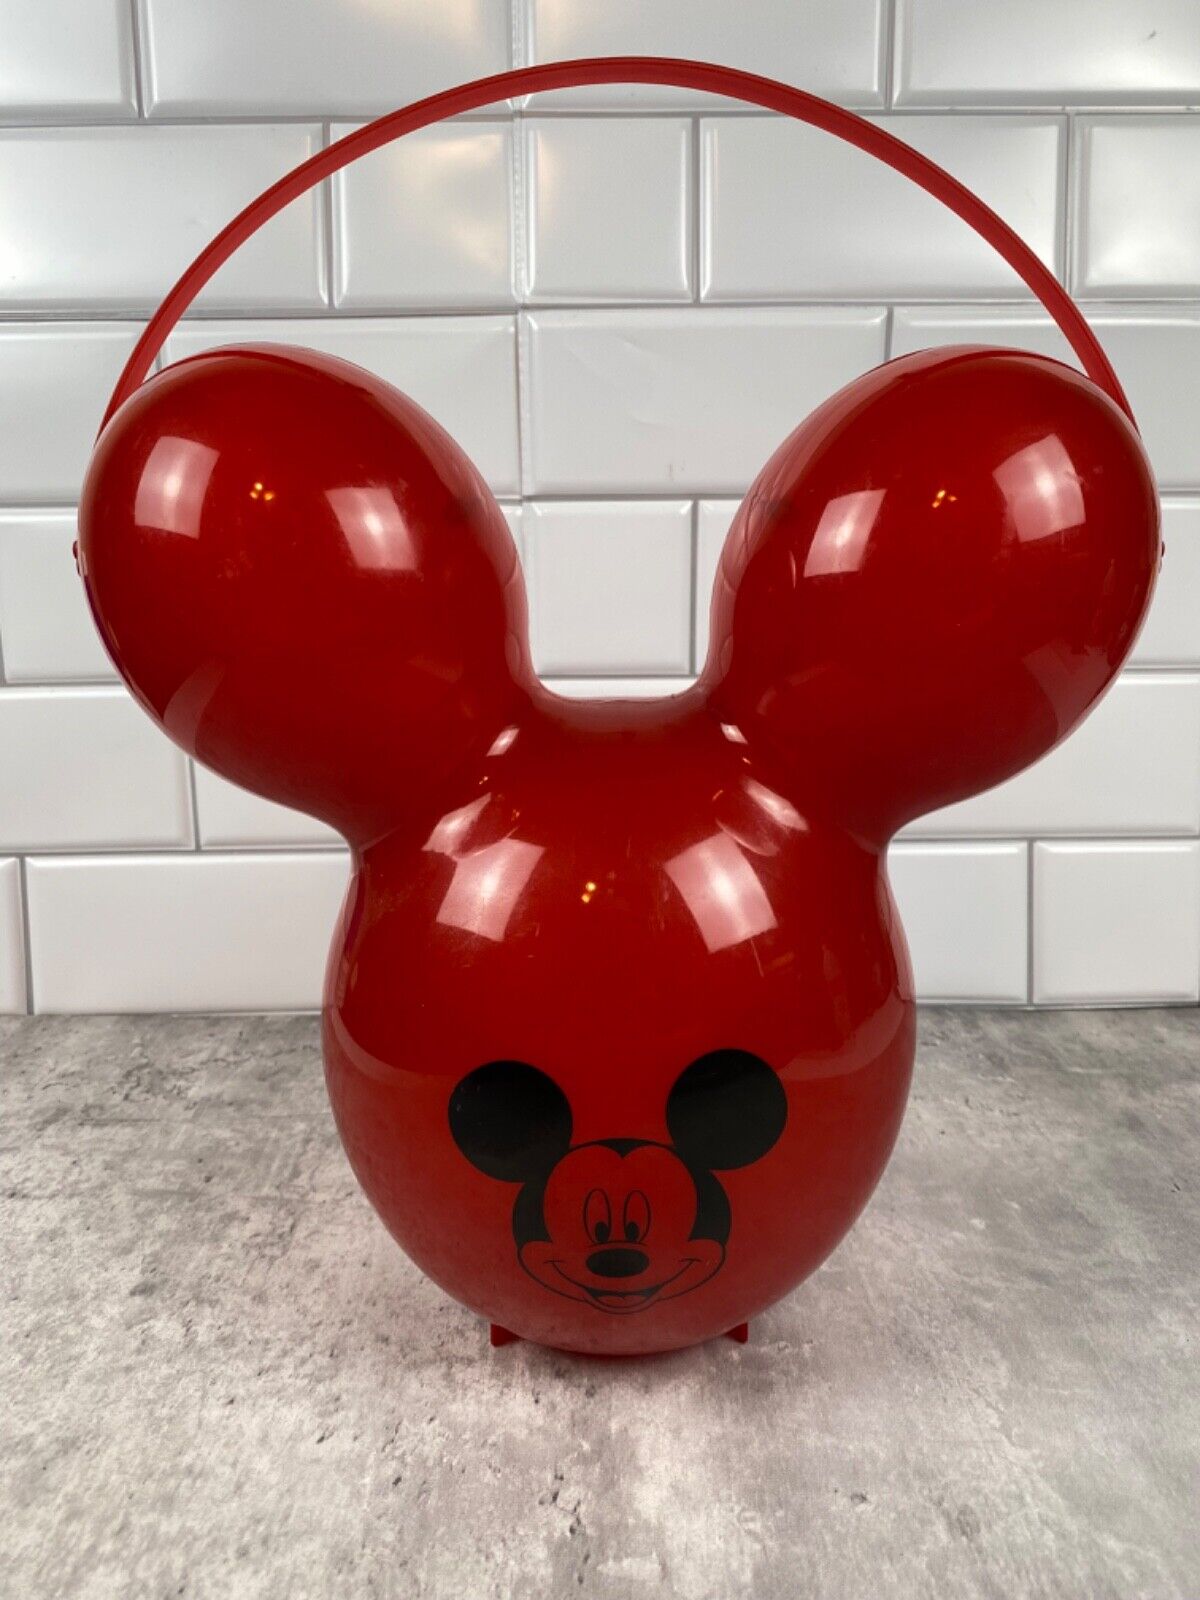 Disneyland 60th Anniversary Red Popcorn Bucket Mickey Ears Balloon Disney Parks